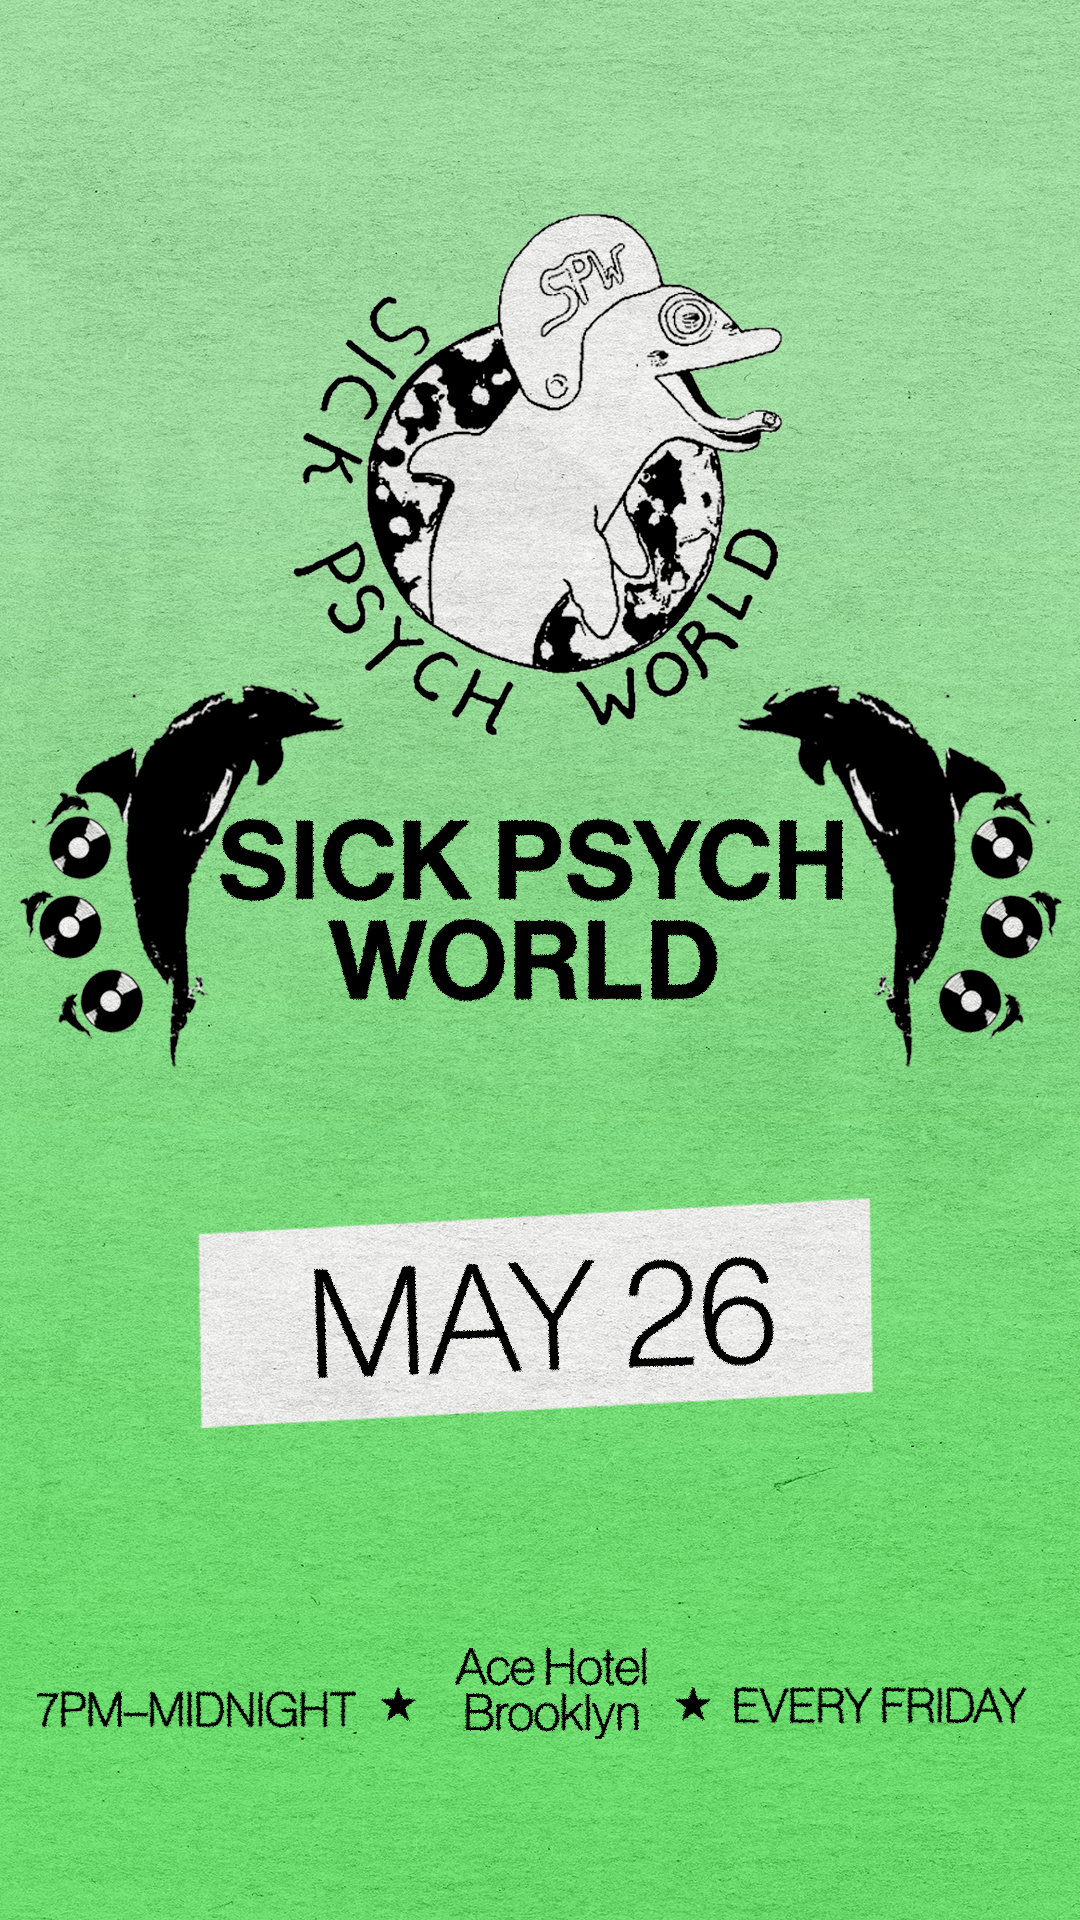 Sick Psych World - May 26